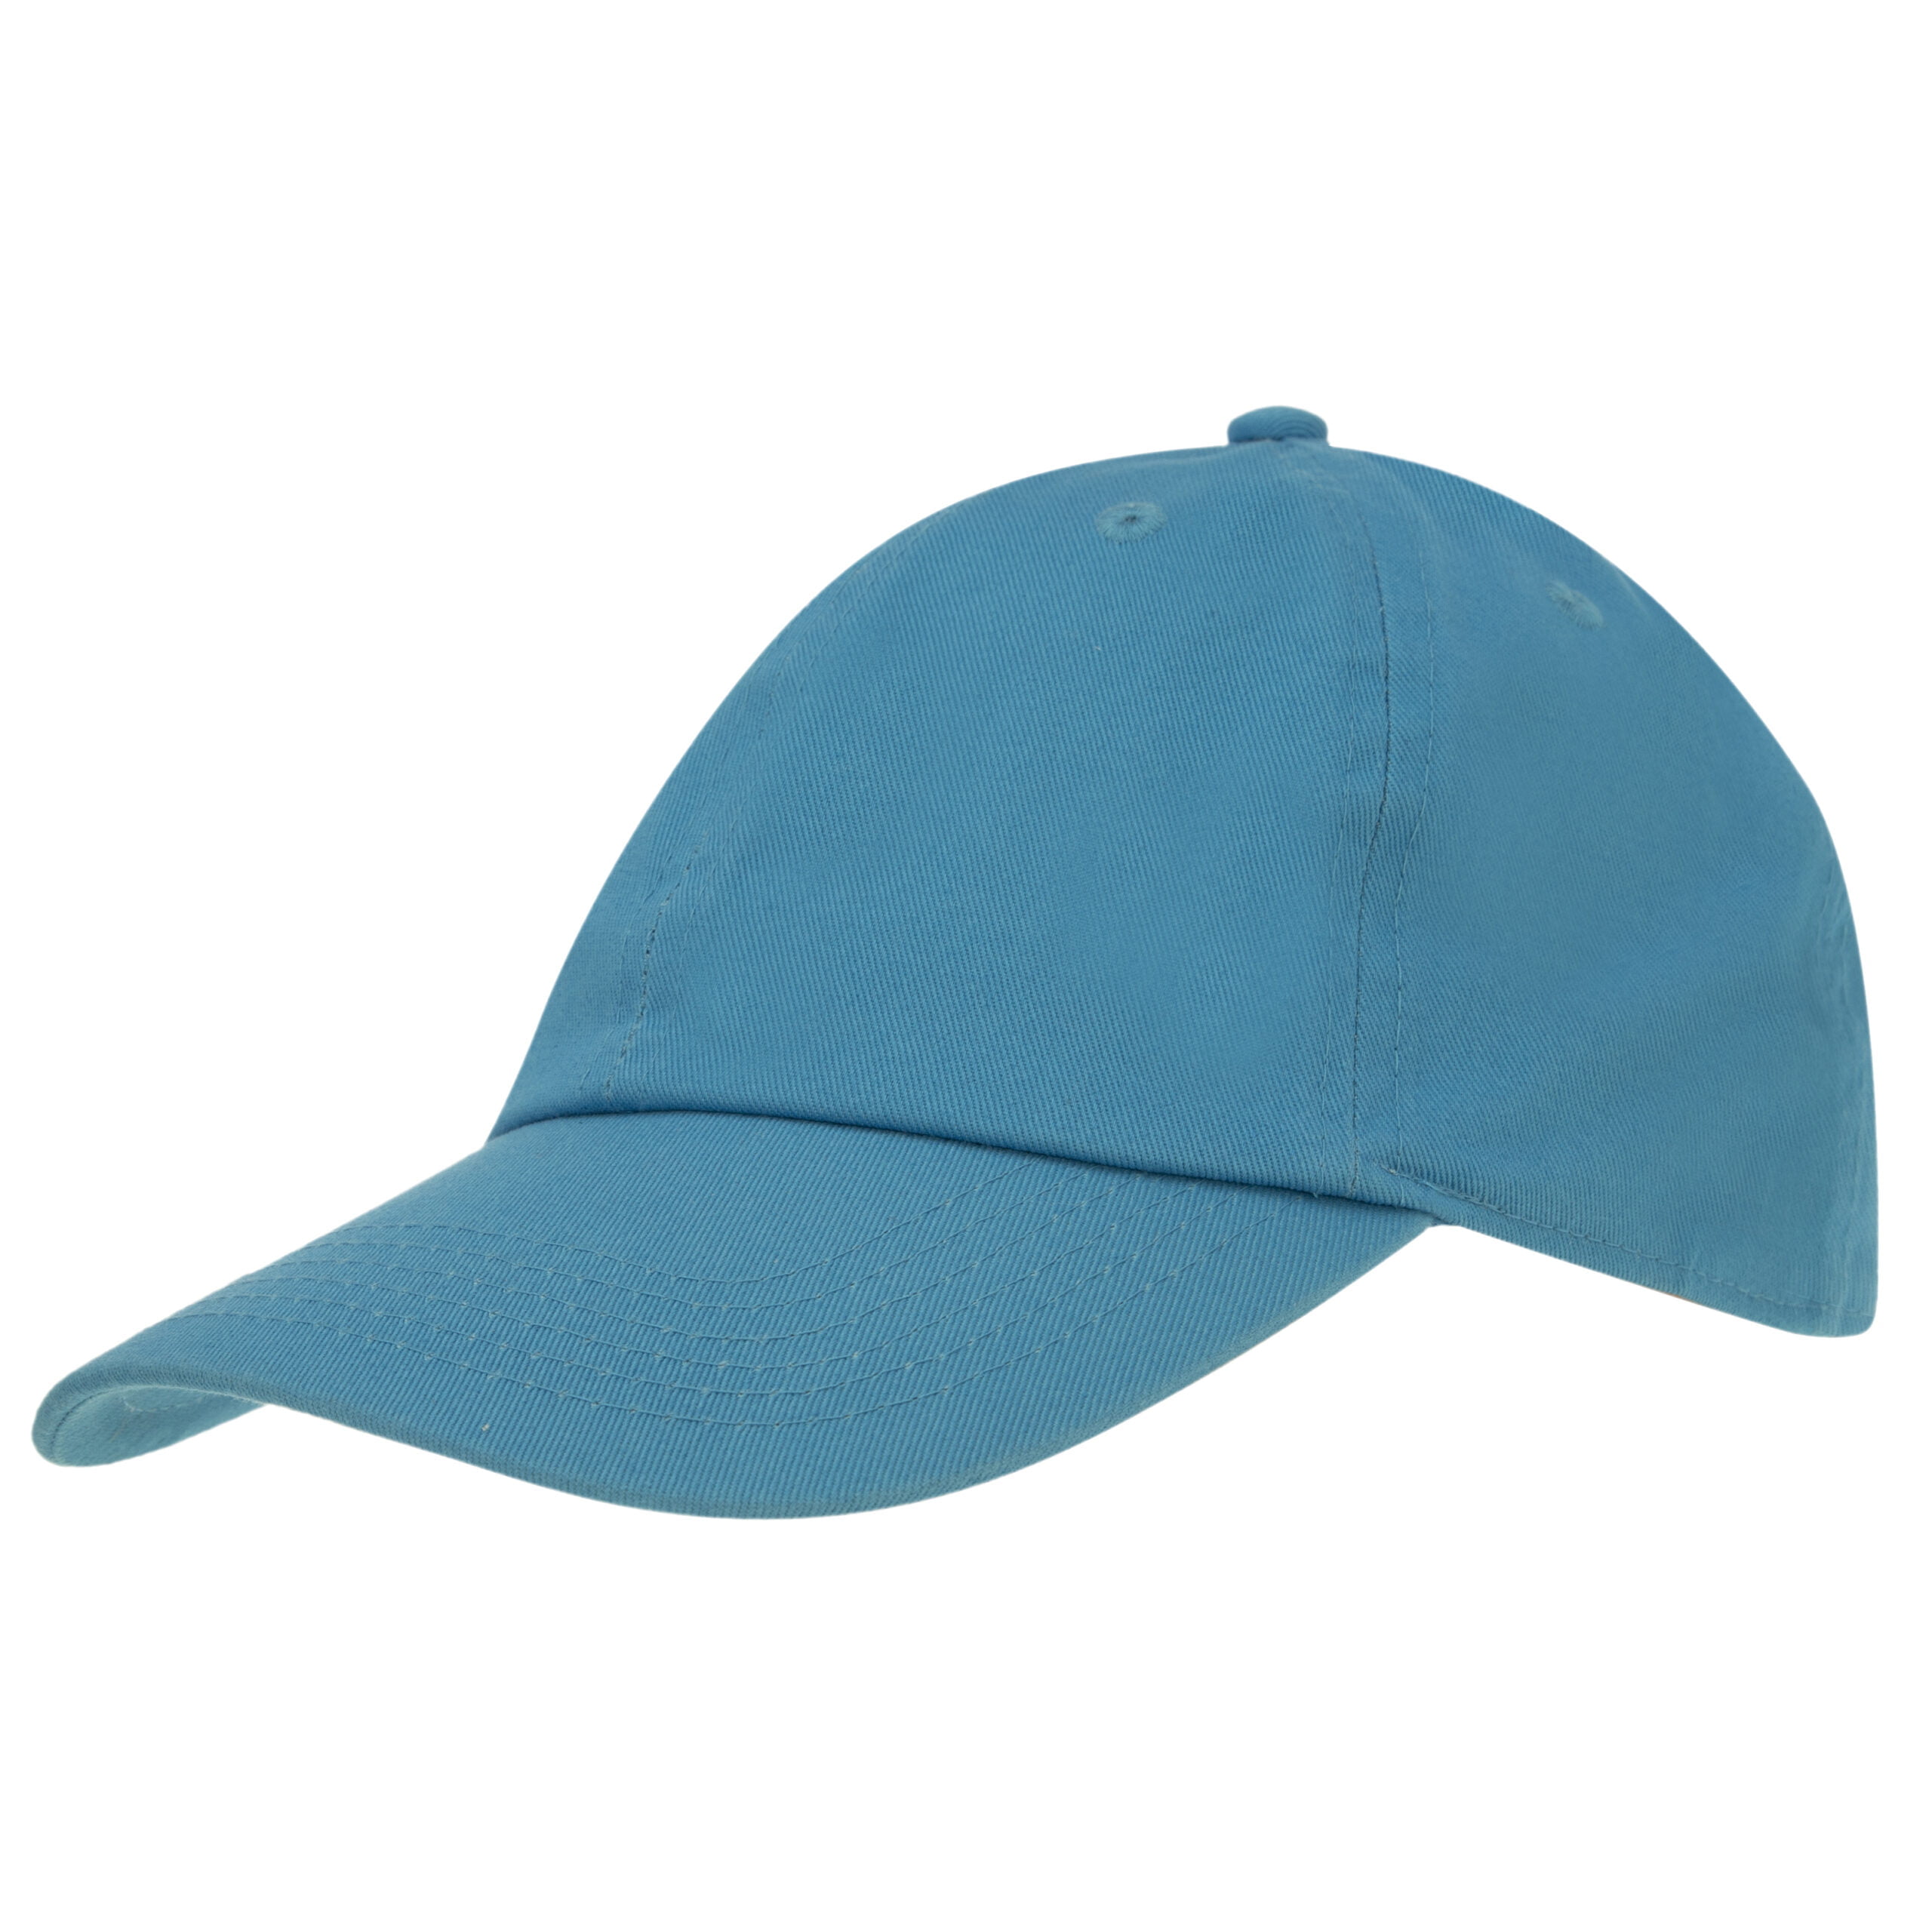 12pcs Turquoise Plain Baseball Hats Low Profile - Unconstructed - Adjustable Clasp - 100% Cotton - Stone Washed - Bulk by the Dozen - Wholesale